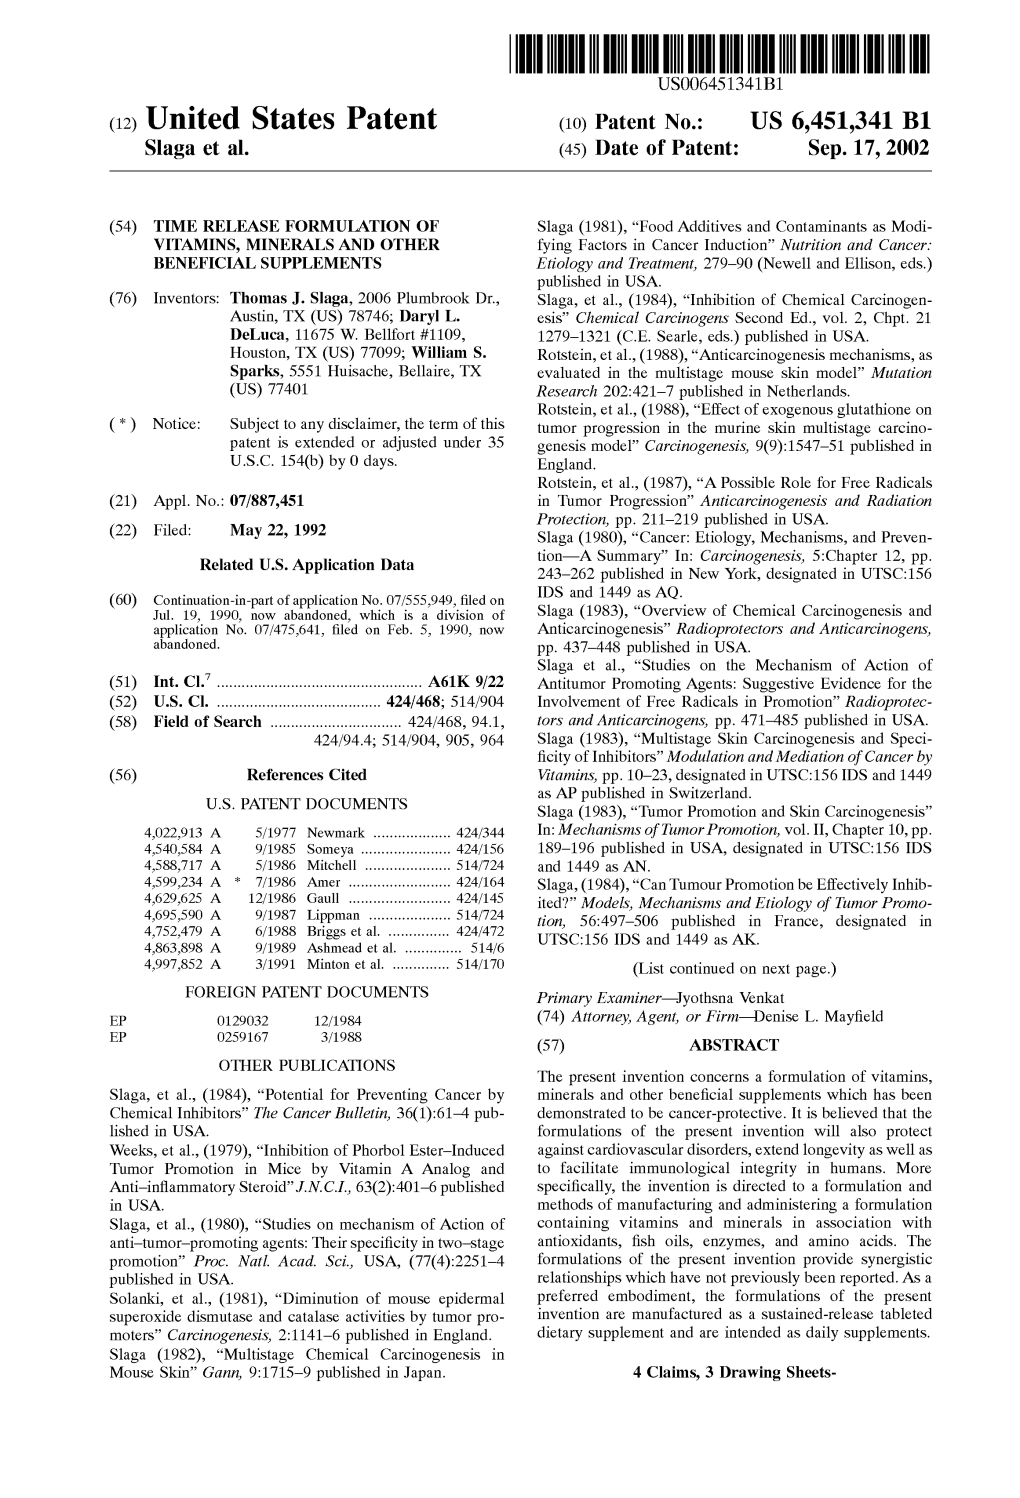 (12) United States Patent (10) Patent No.: US 6,451,341 B1 Slaga Et Al